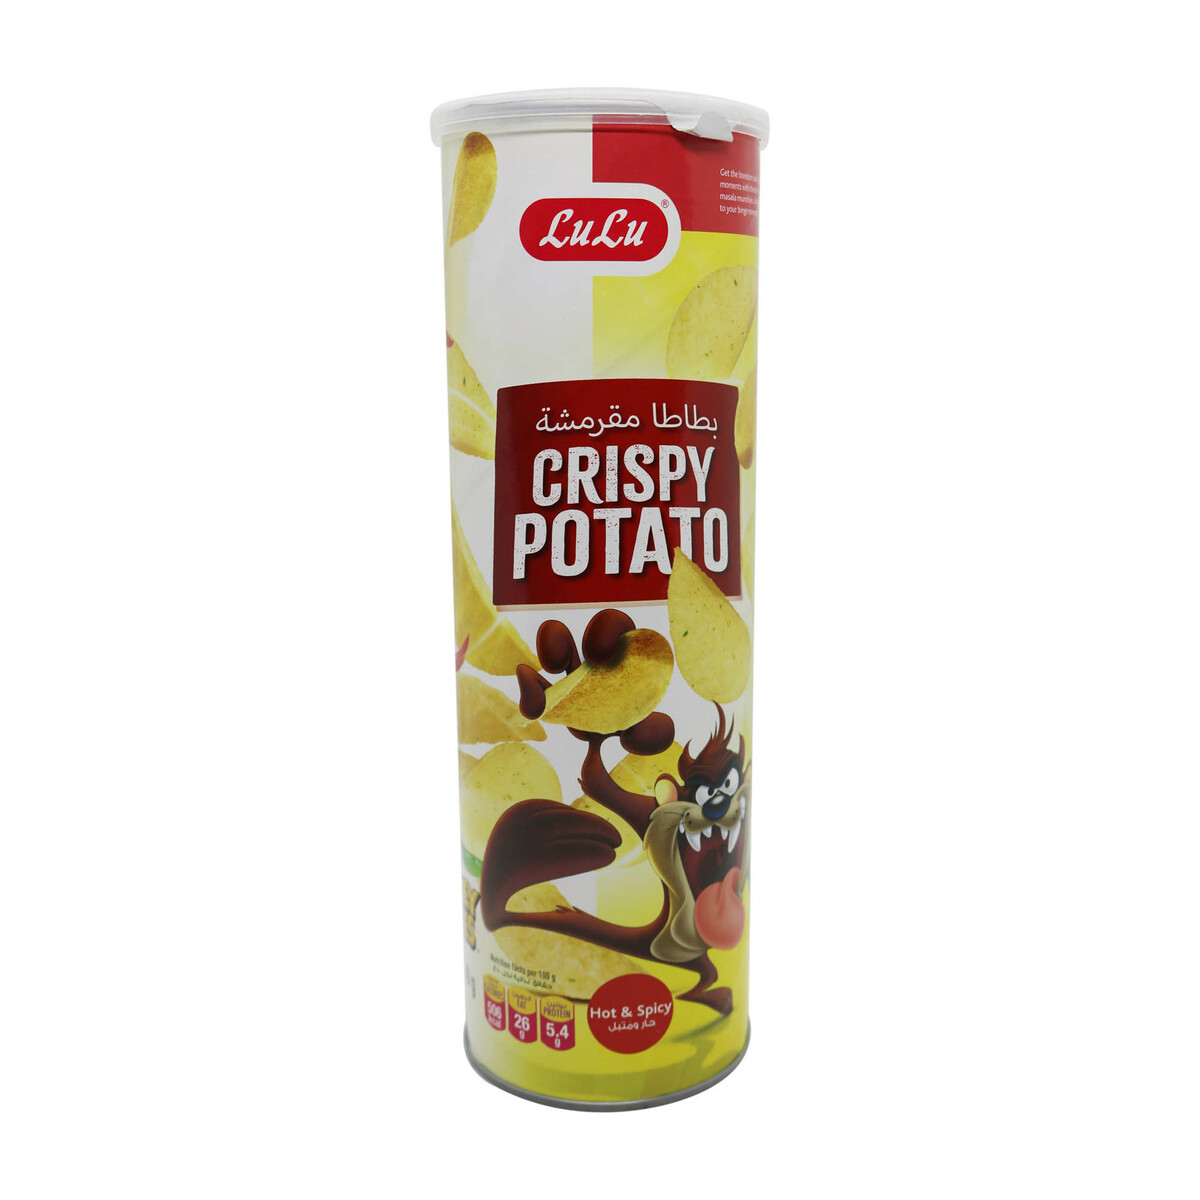 Lulu Crispy Potato Hot & Spicy 160g